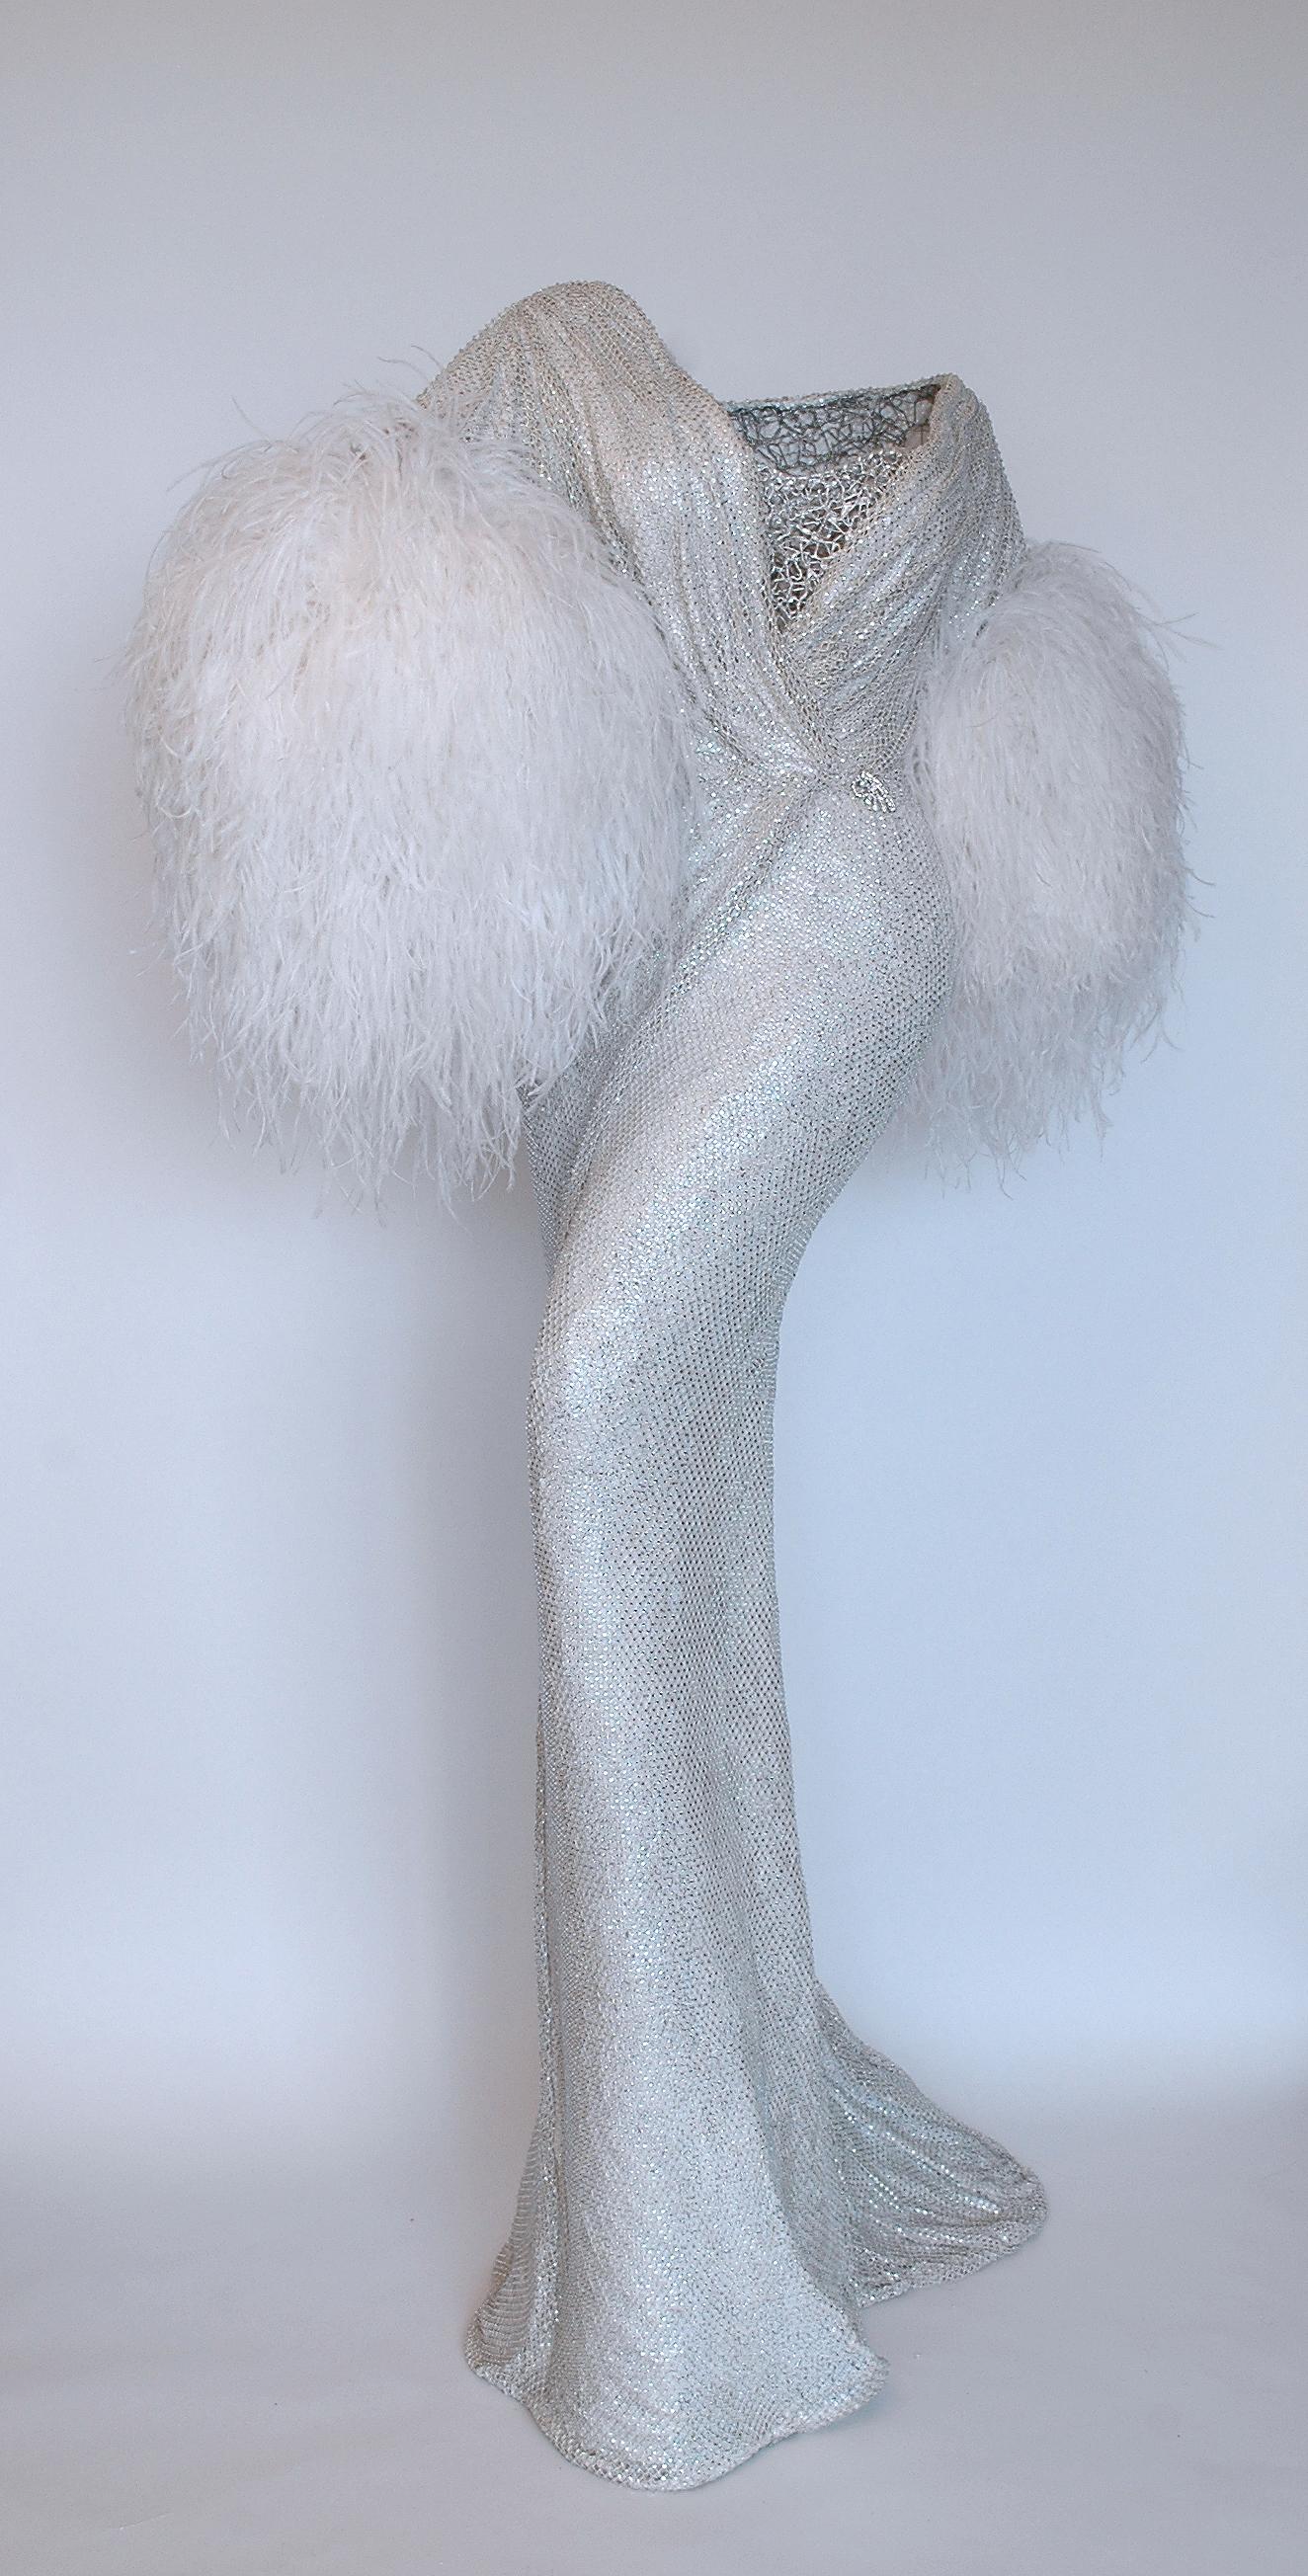 Sophie DeFrancesca Figurative Sculpture - Original Blonde Bombshell